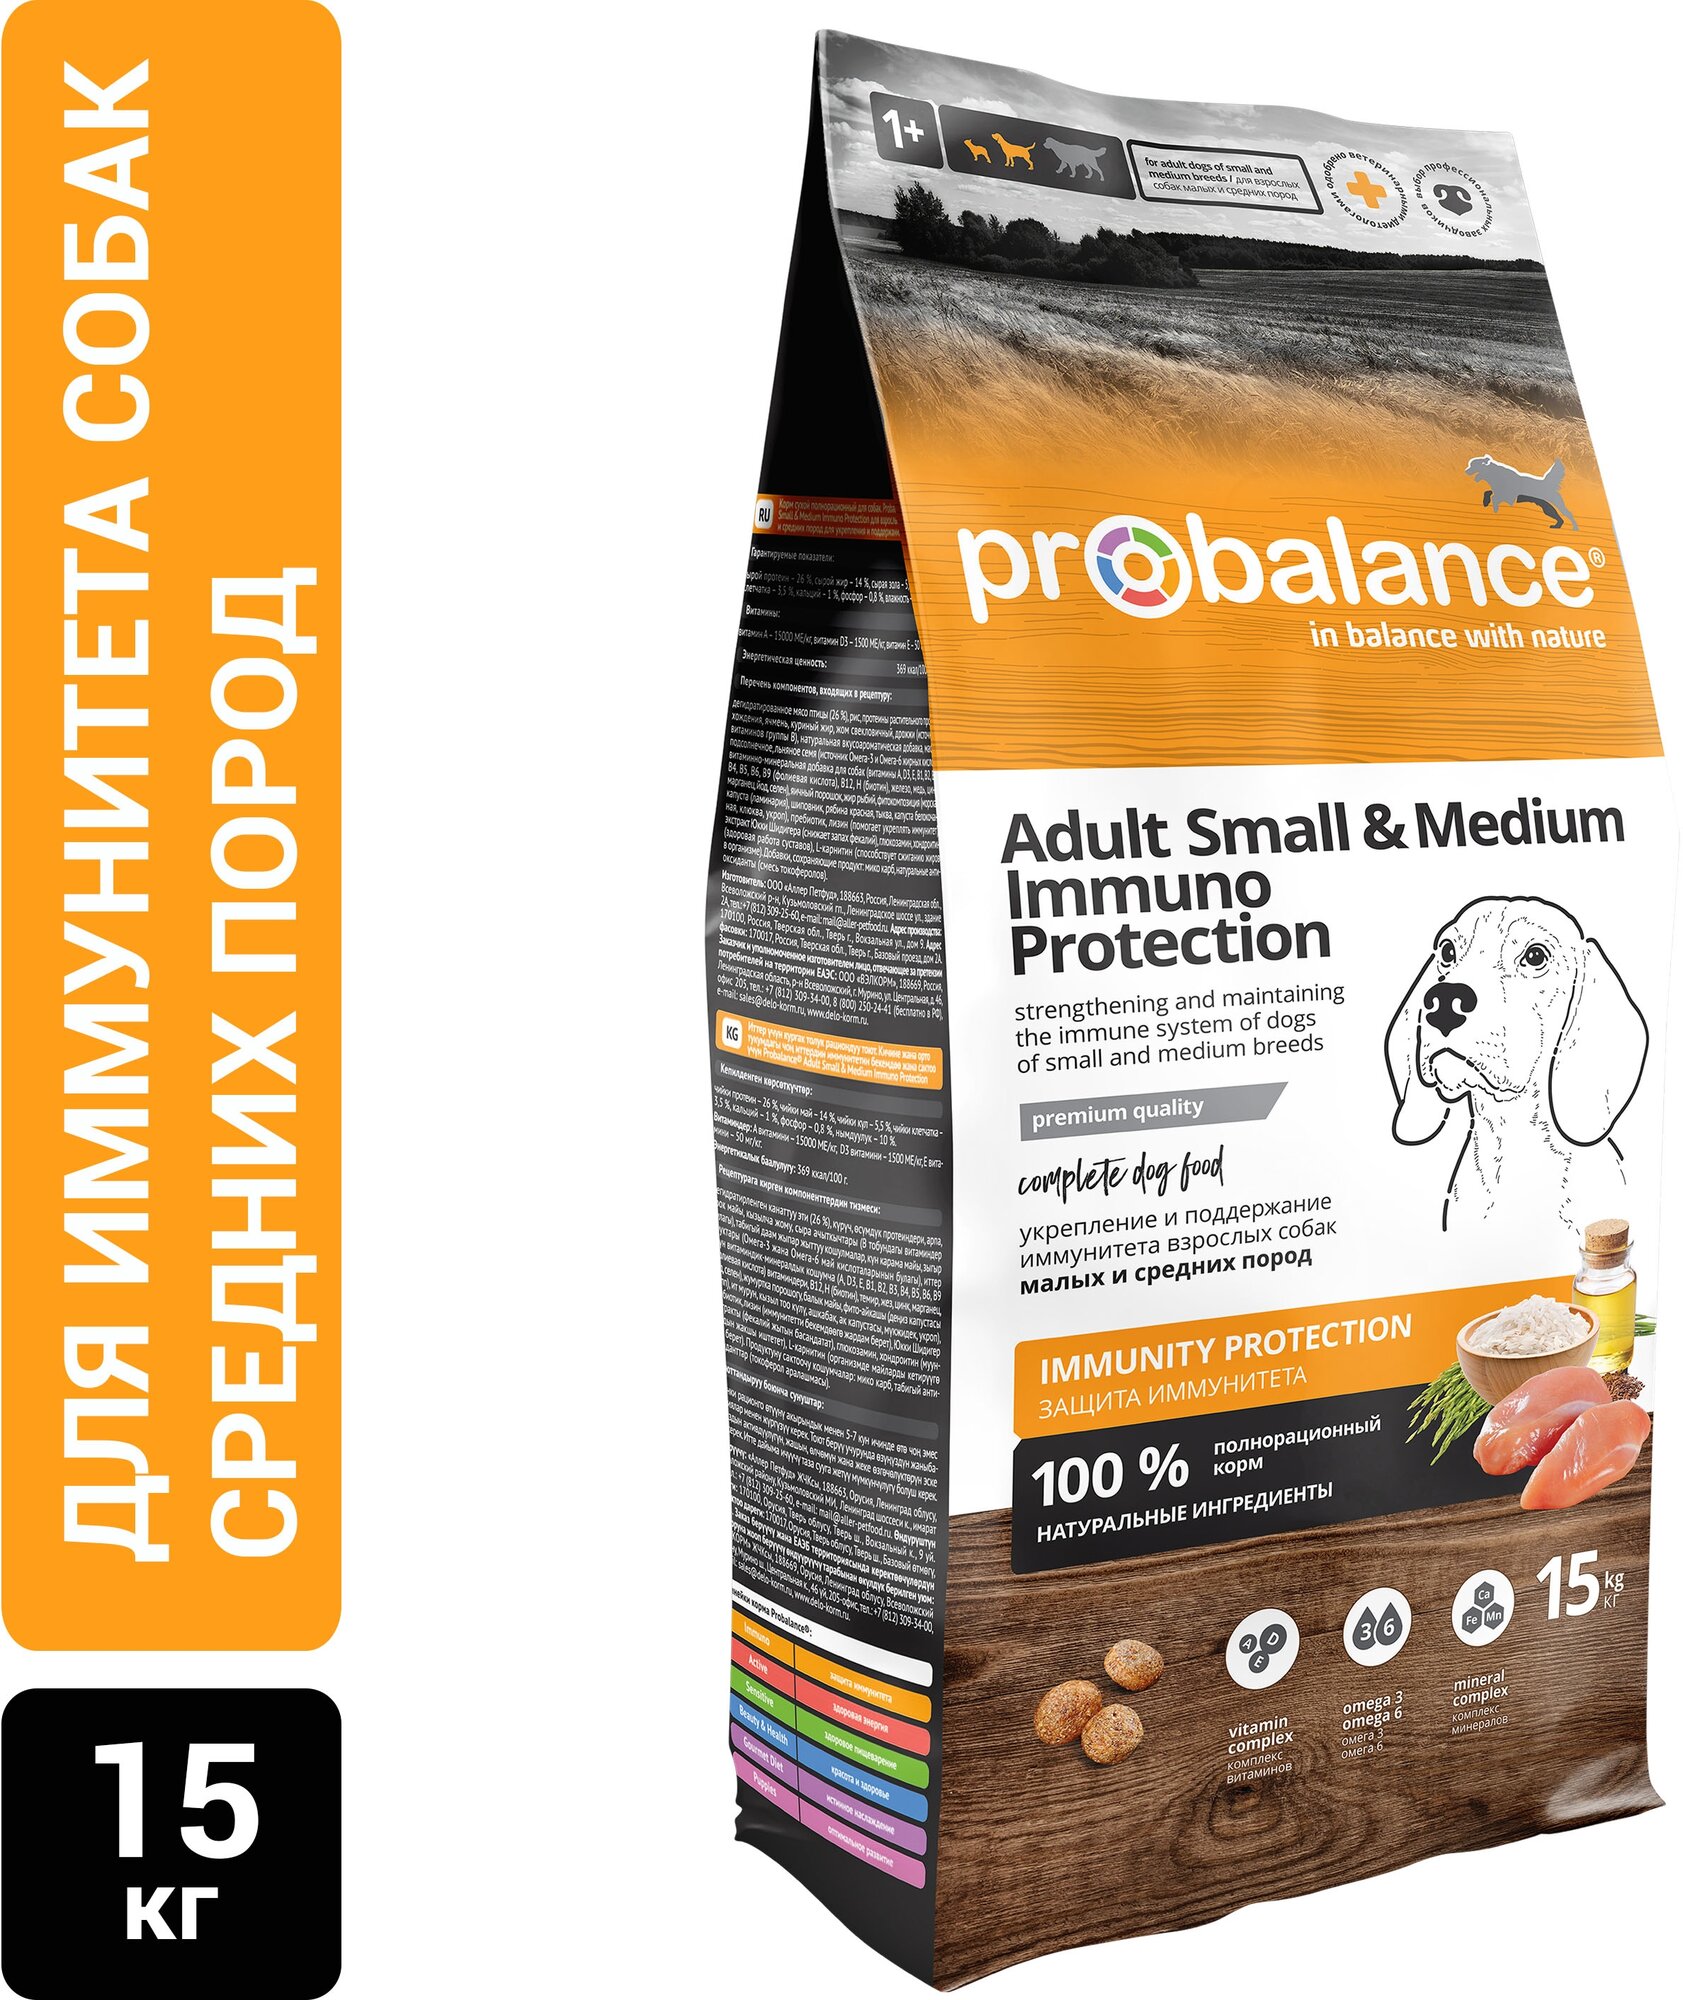 Сухой корм для собак ProBalance Immuno 1 уп. х 1 шт. х 15 кг